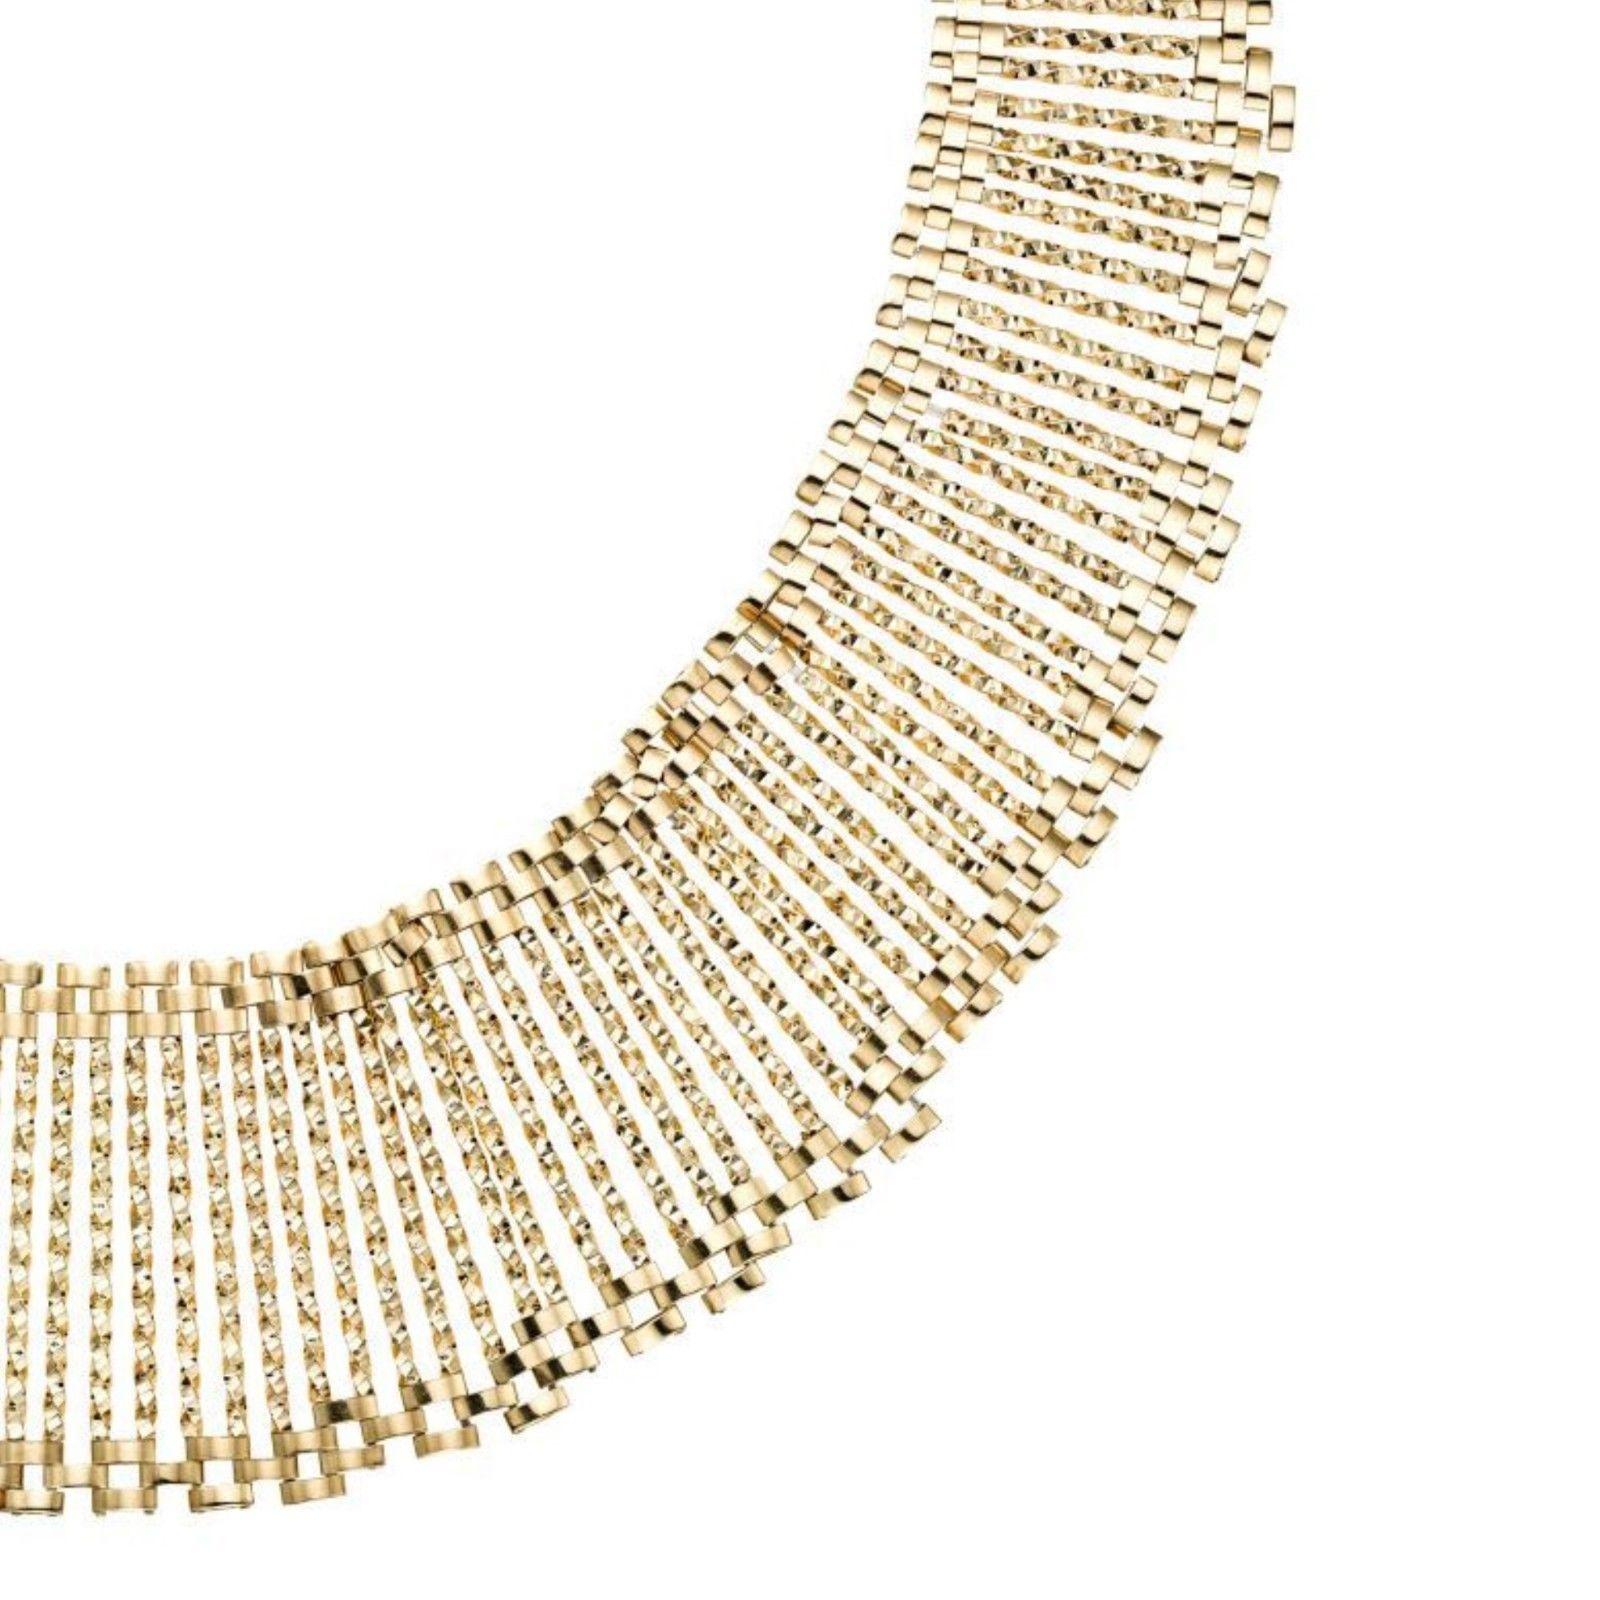 cleopatra's necklace